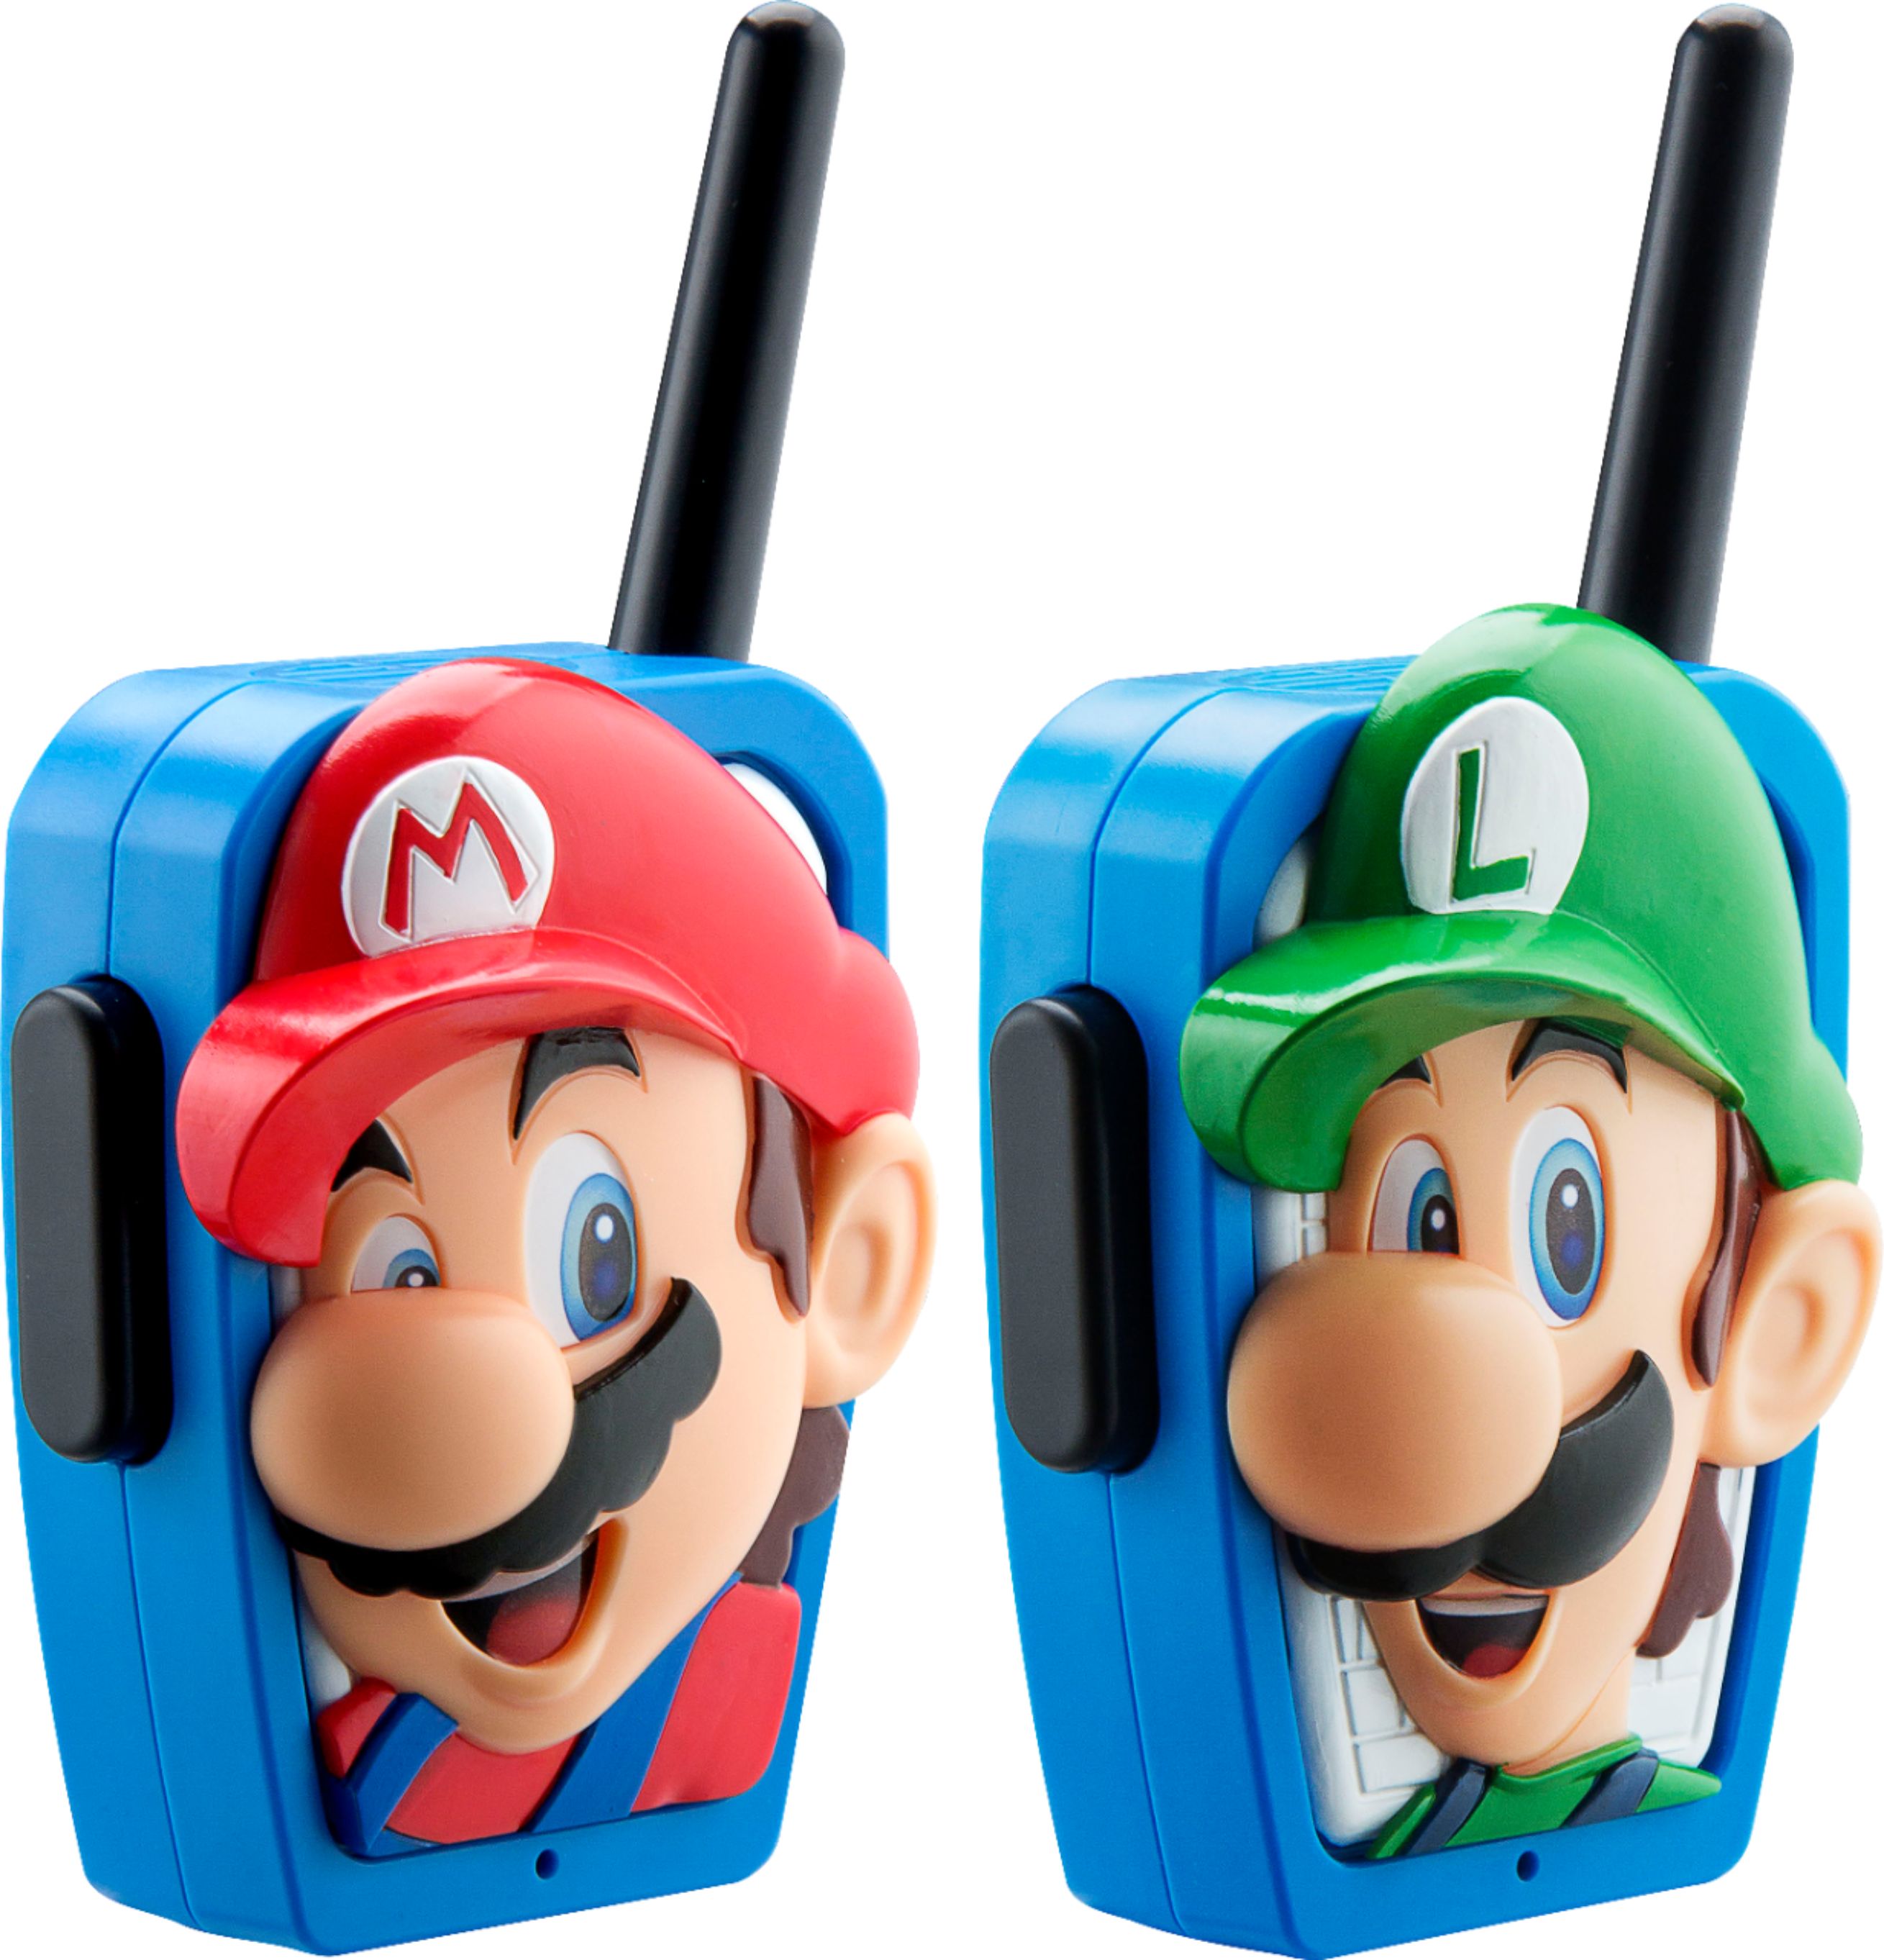 Left View: eKids - Super Mario Mid Range Walkie Talkies